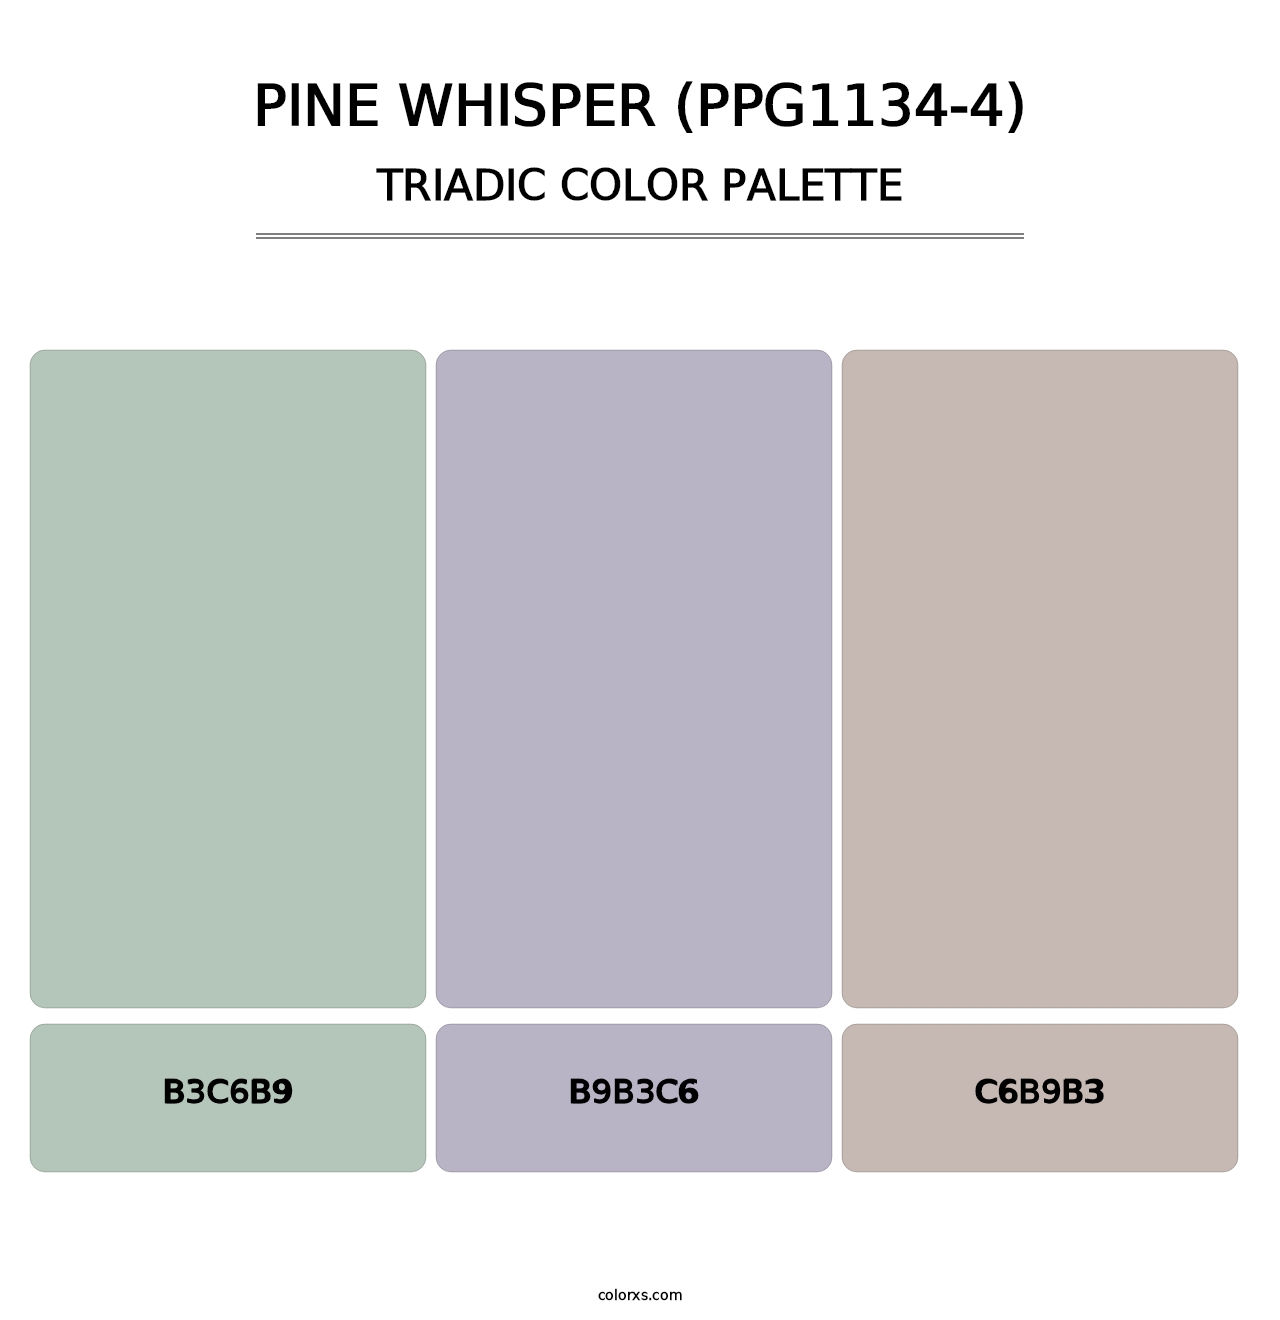 Pine Whisper (PPG1134-4) - Triadic Color Palette